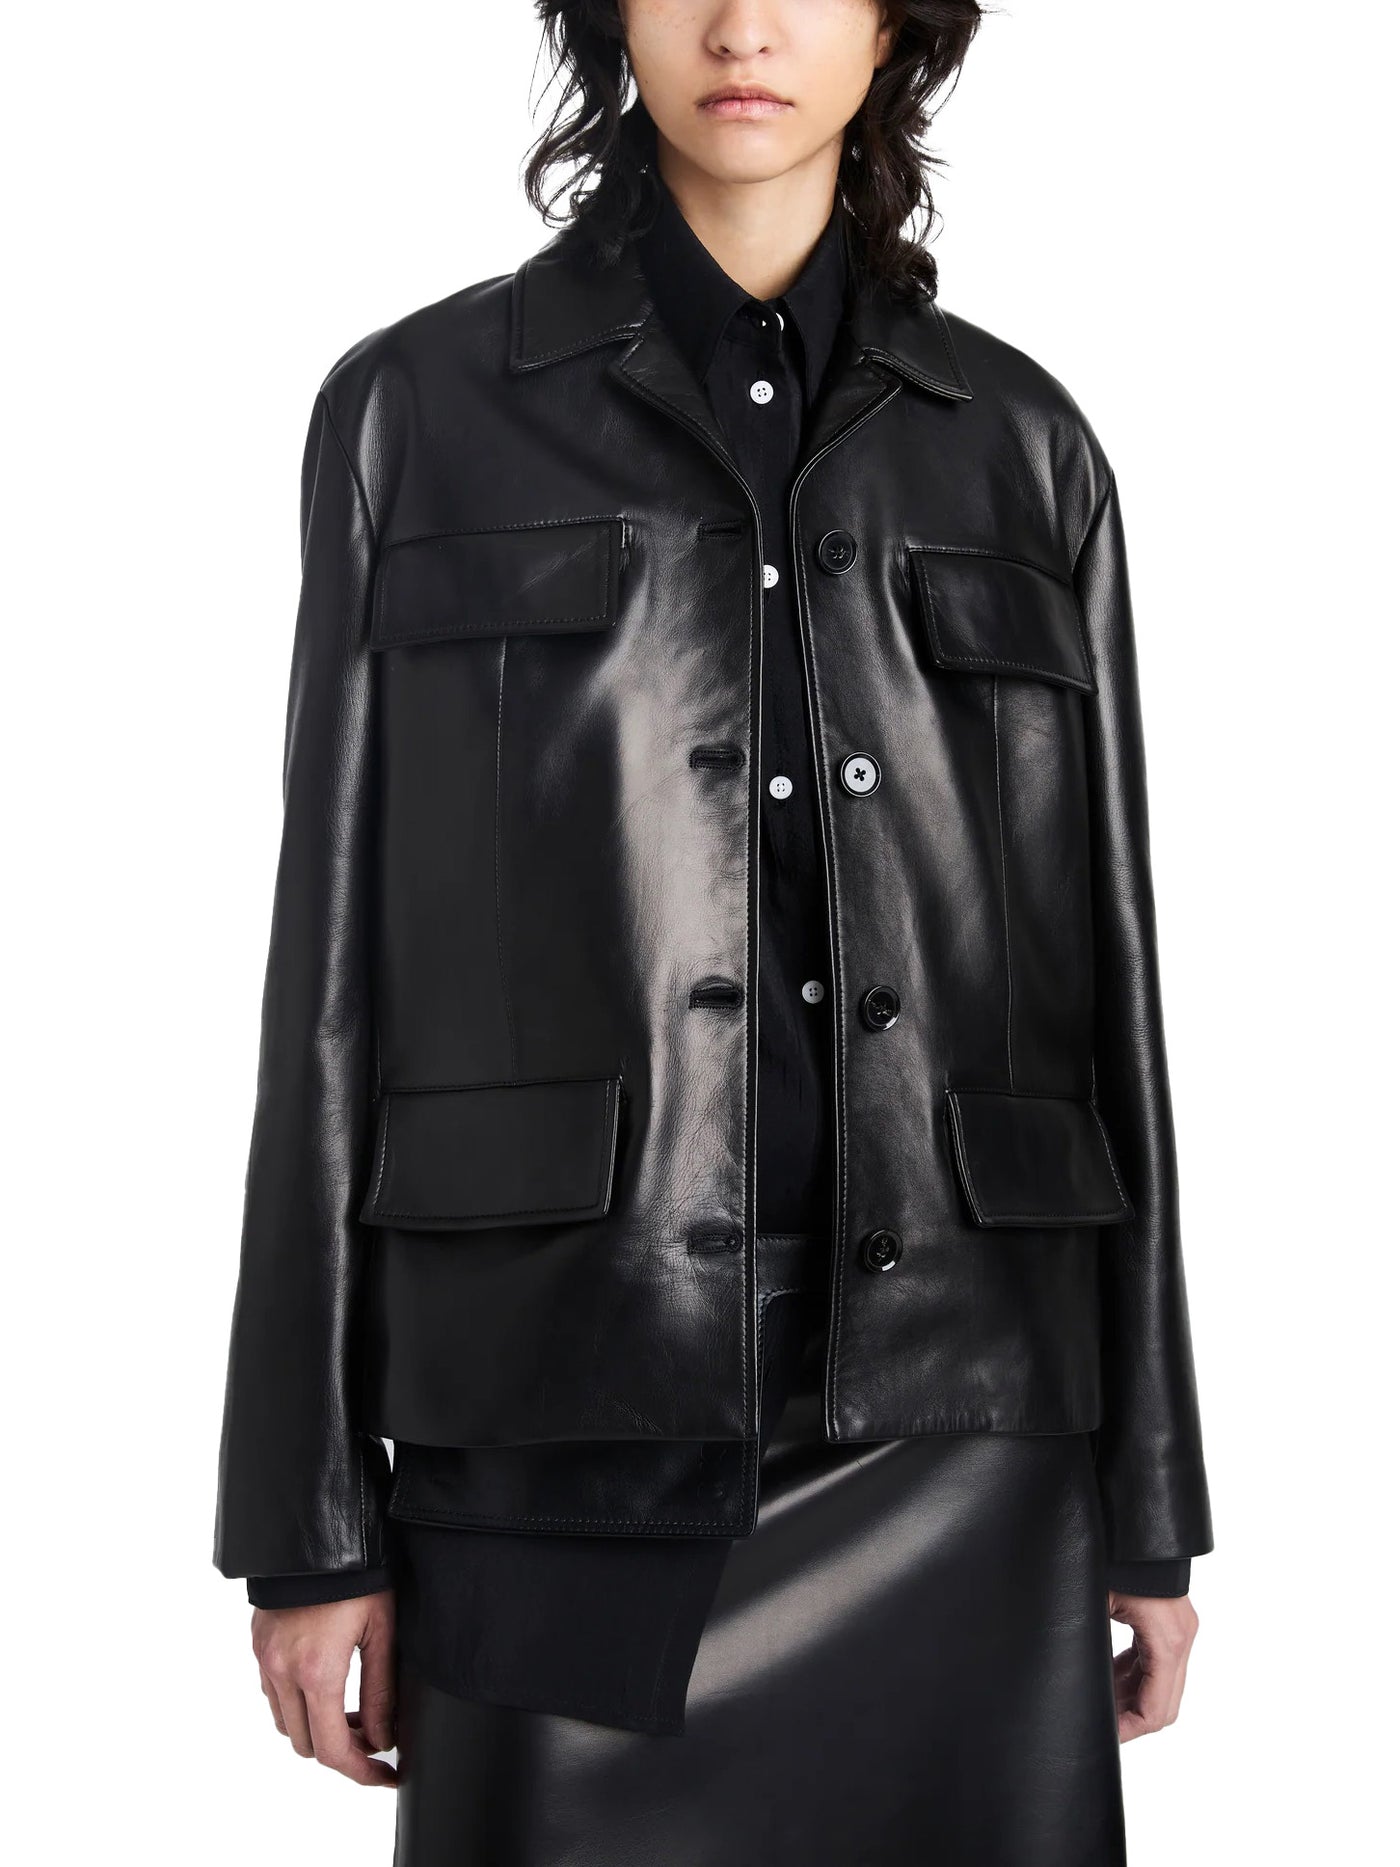 Roos Jacket in Black Leather